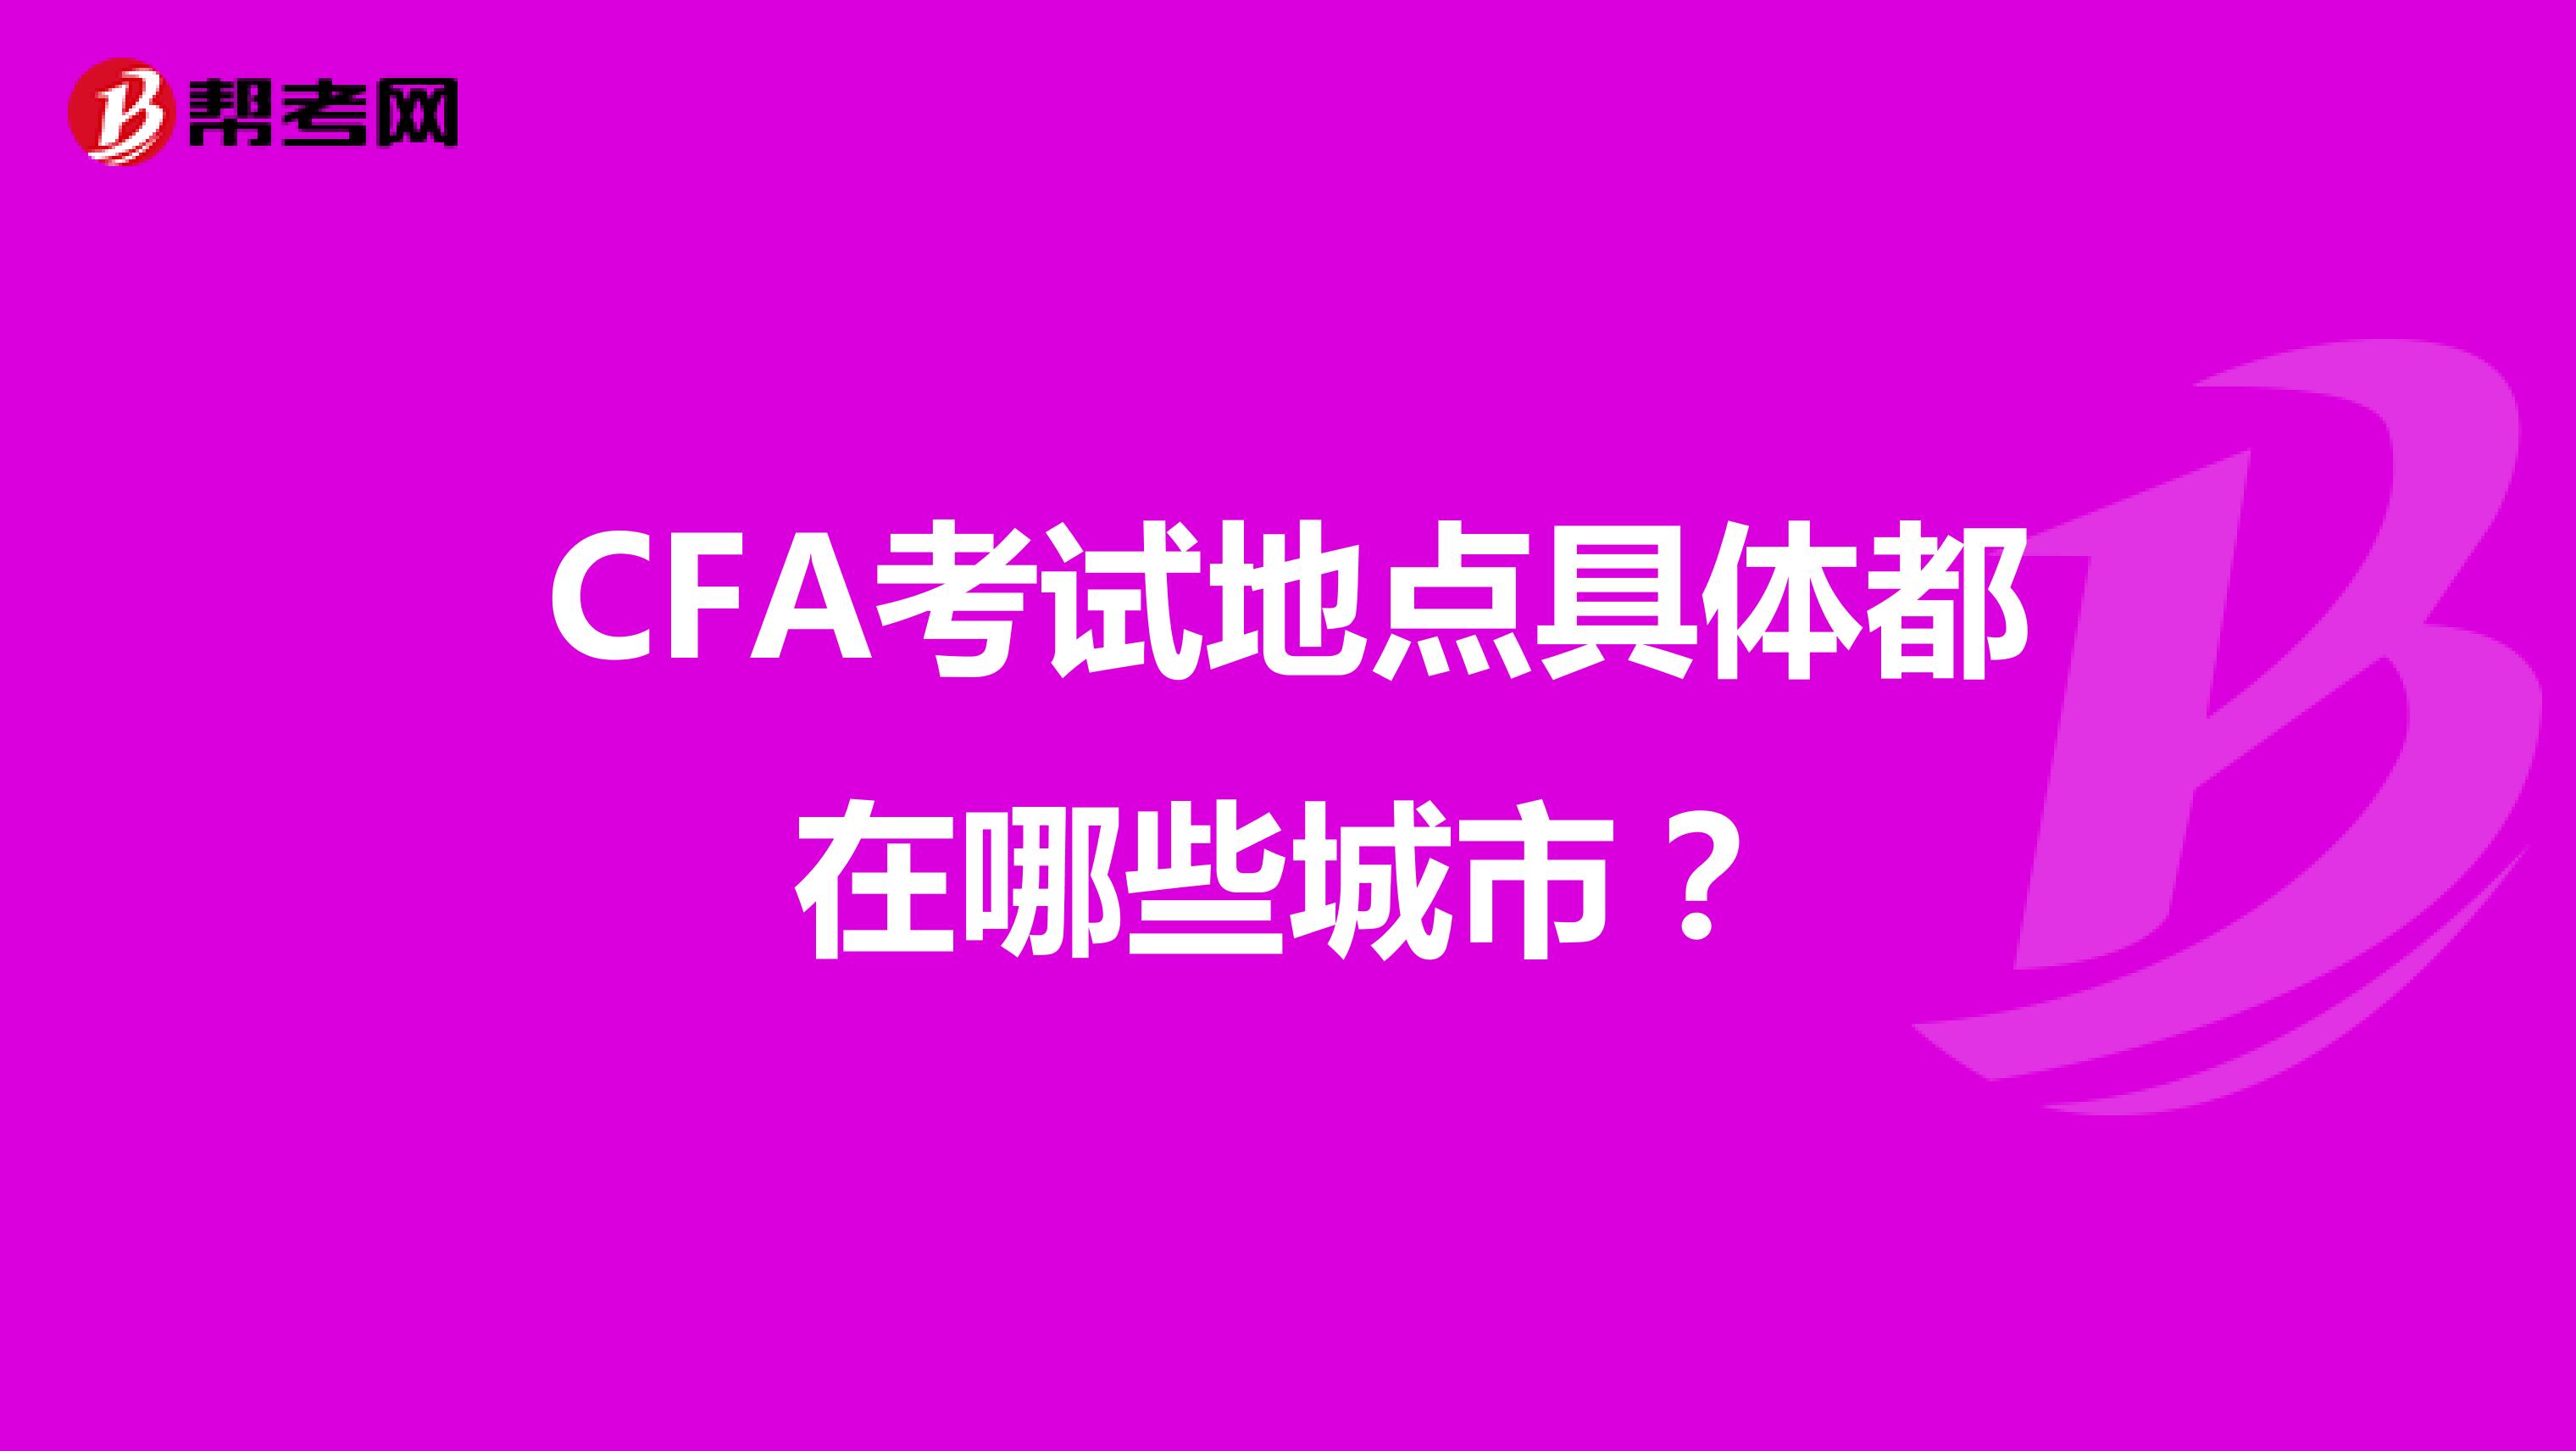 CFA考试地点具体都在哪些城市？